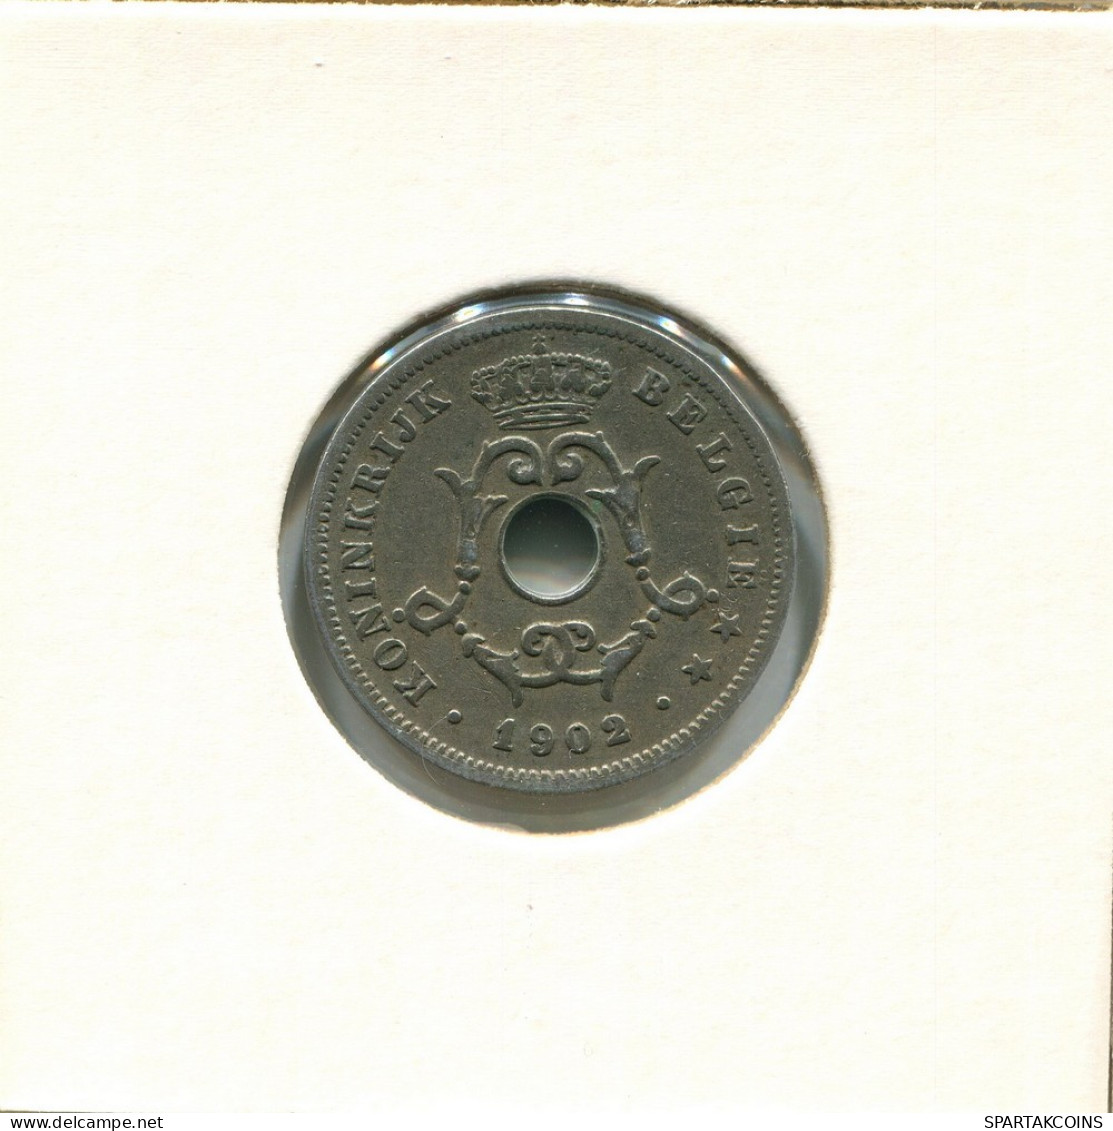 10 CENTIMES 1902 DUTCH Text BELGIUM Coin #BA273.U - 10 Cents